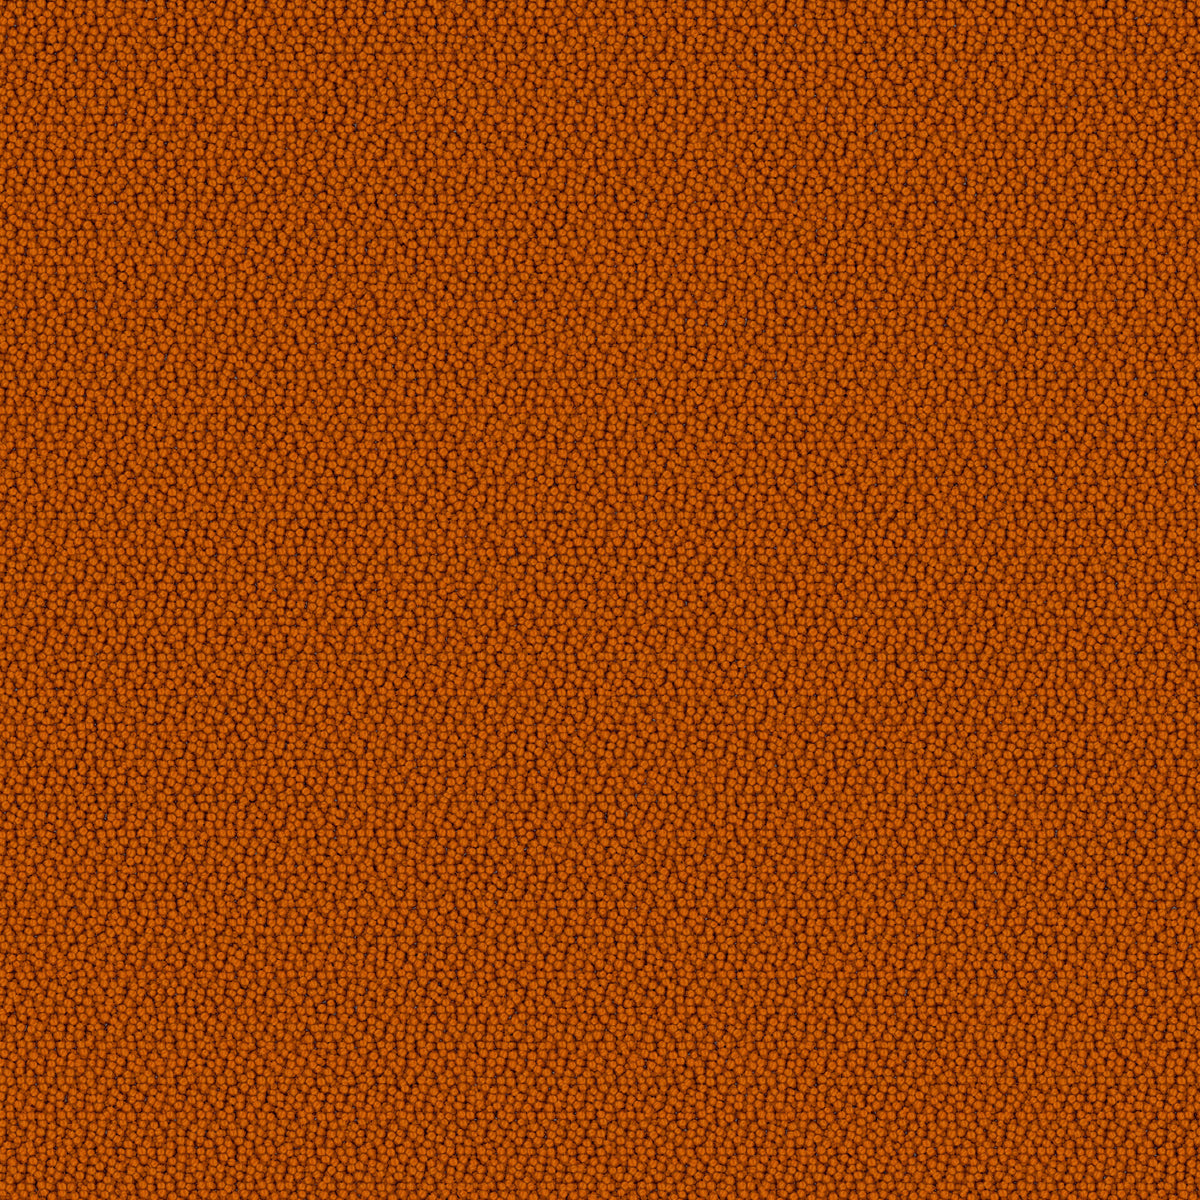 Mohawk Group - Colorbeat - Carpet Tile - Electric Orange